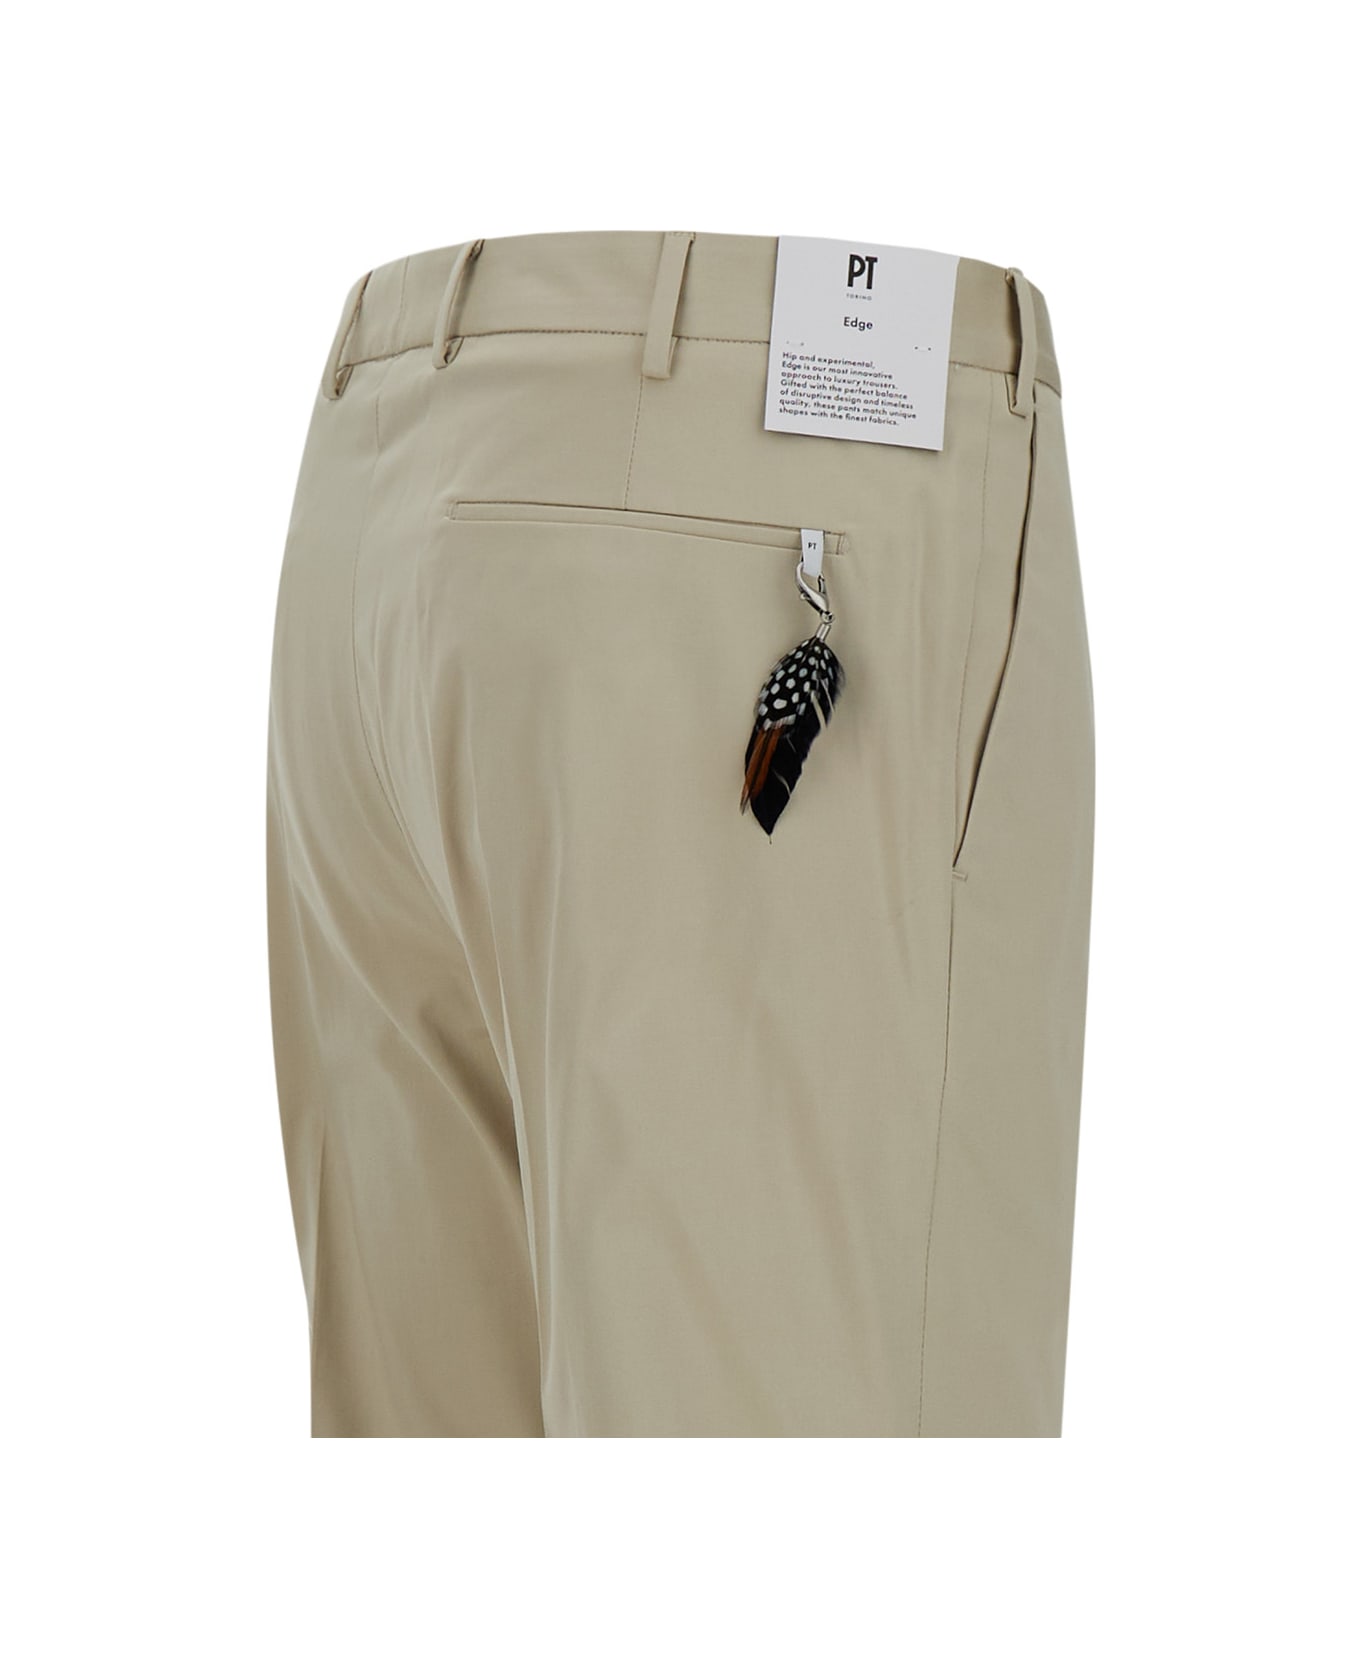 PT01 Beige Slim Fit Trousers In Cotton Blend Man - Beige ボトムス